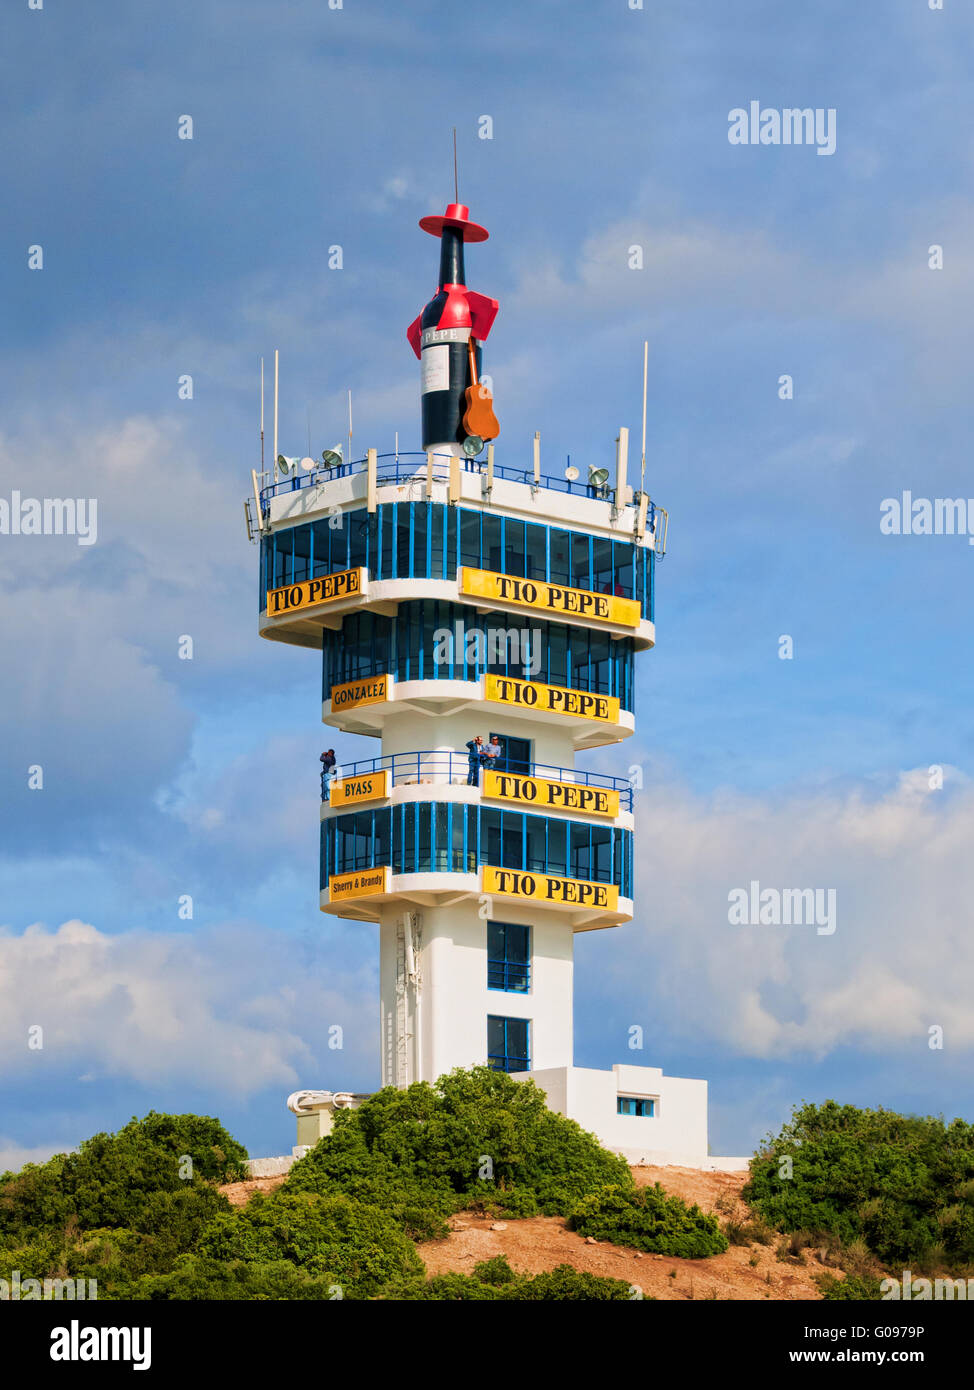 Jerez Speedway Press tower tio pepe Stock Photo